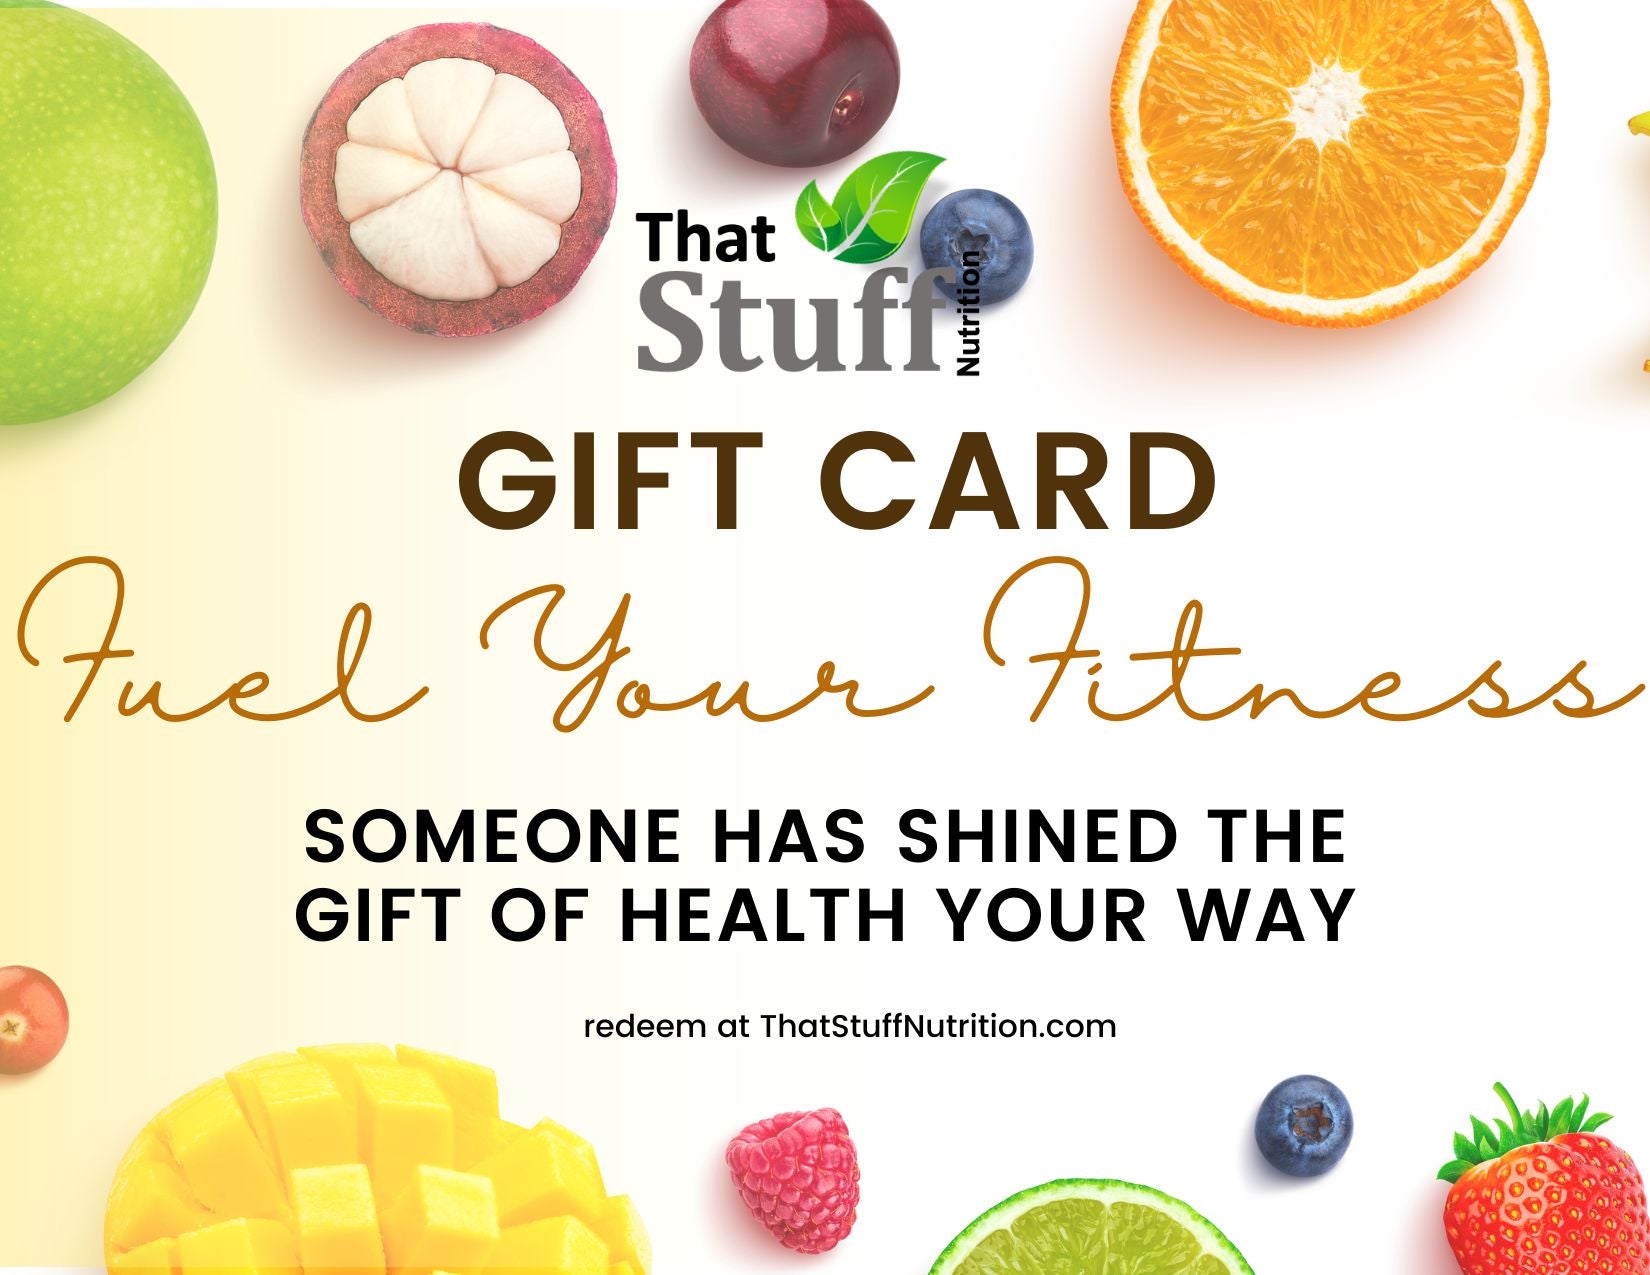 Send A Gift Card - GlobalGiving